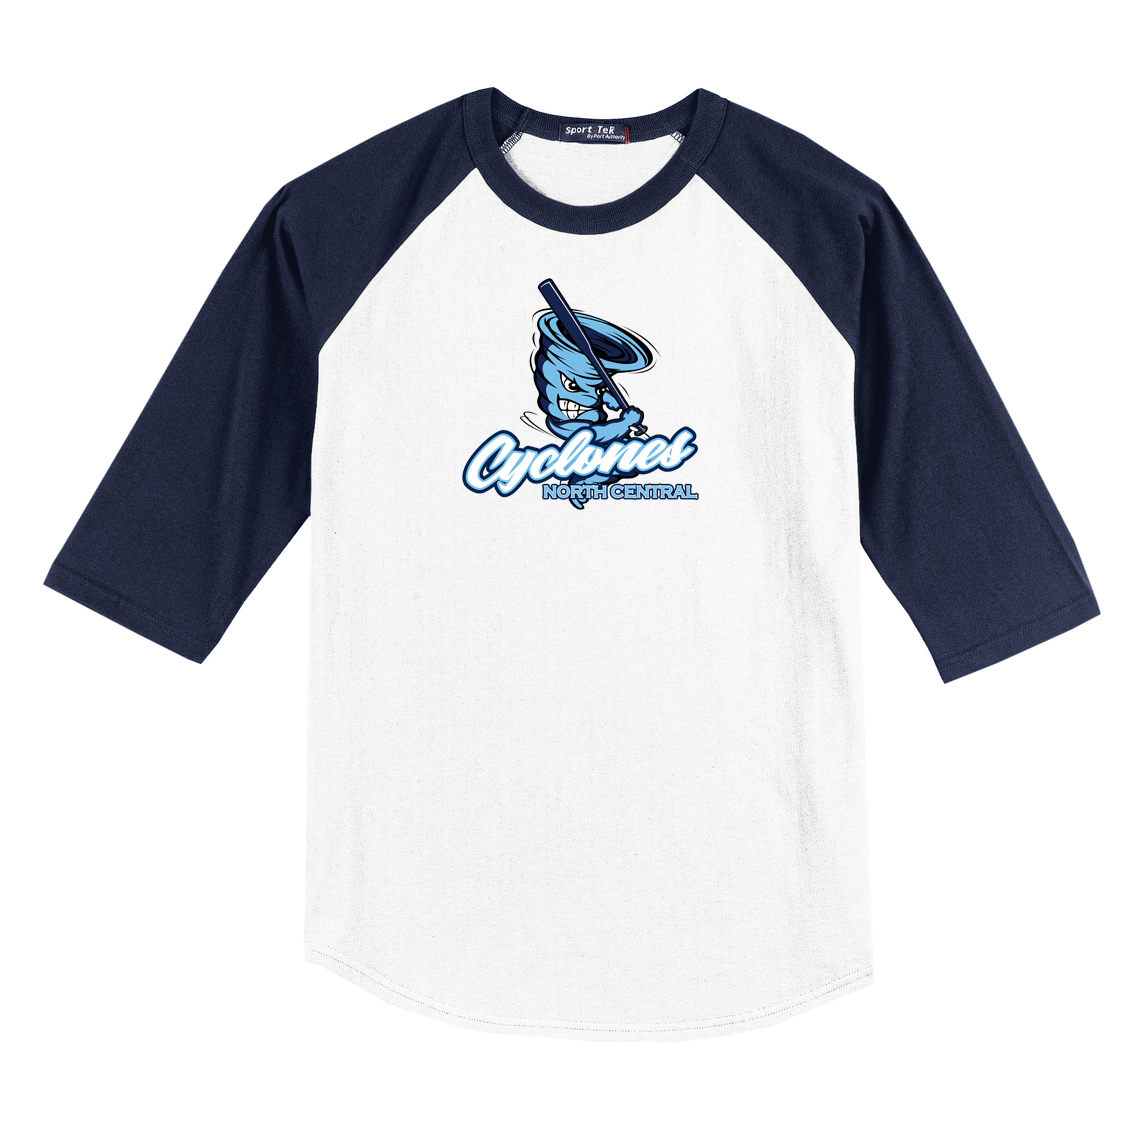 Cyclones Baseball 3/4 Sleeve Baseball Shirt